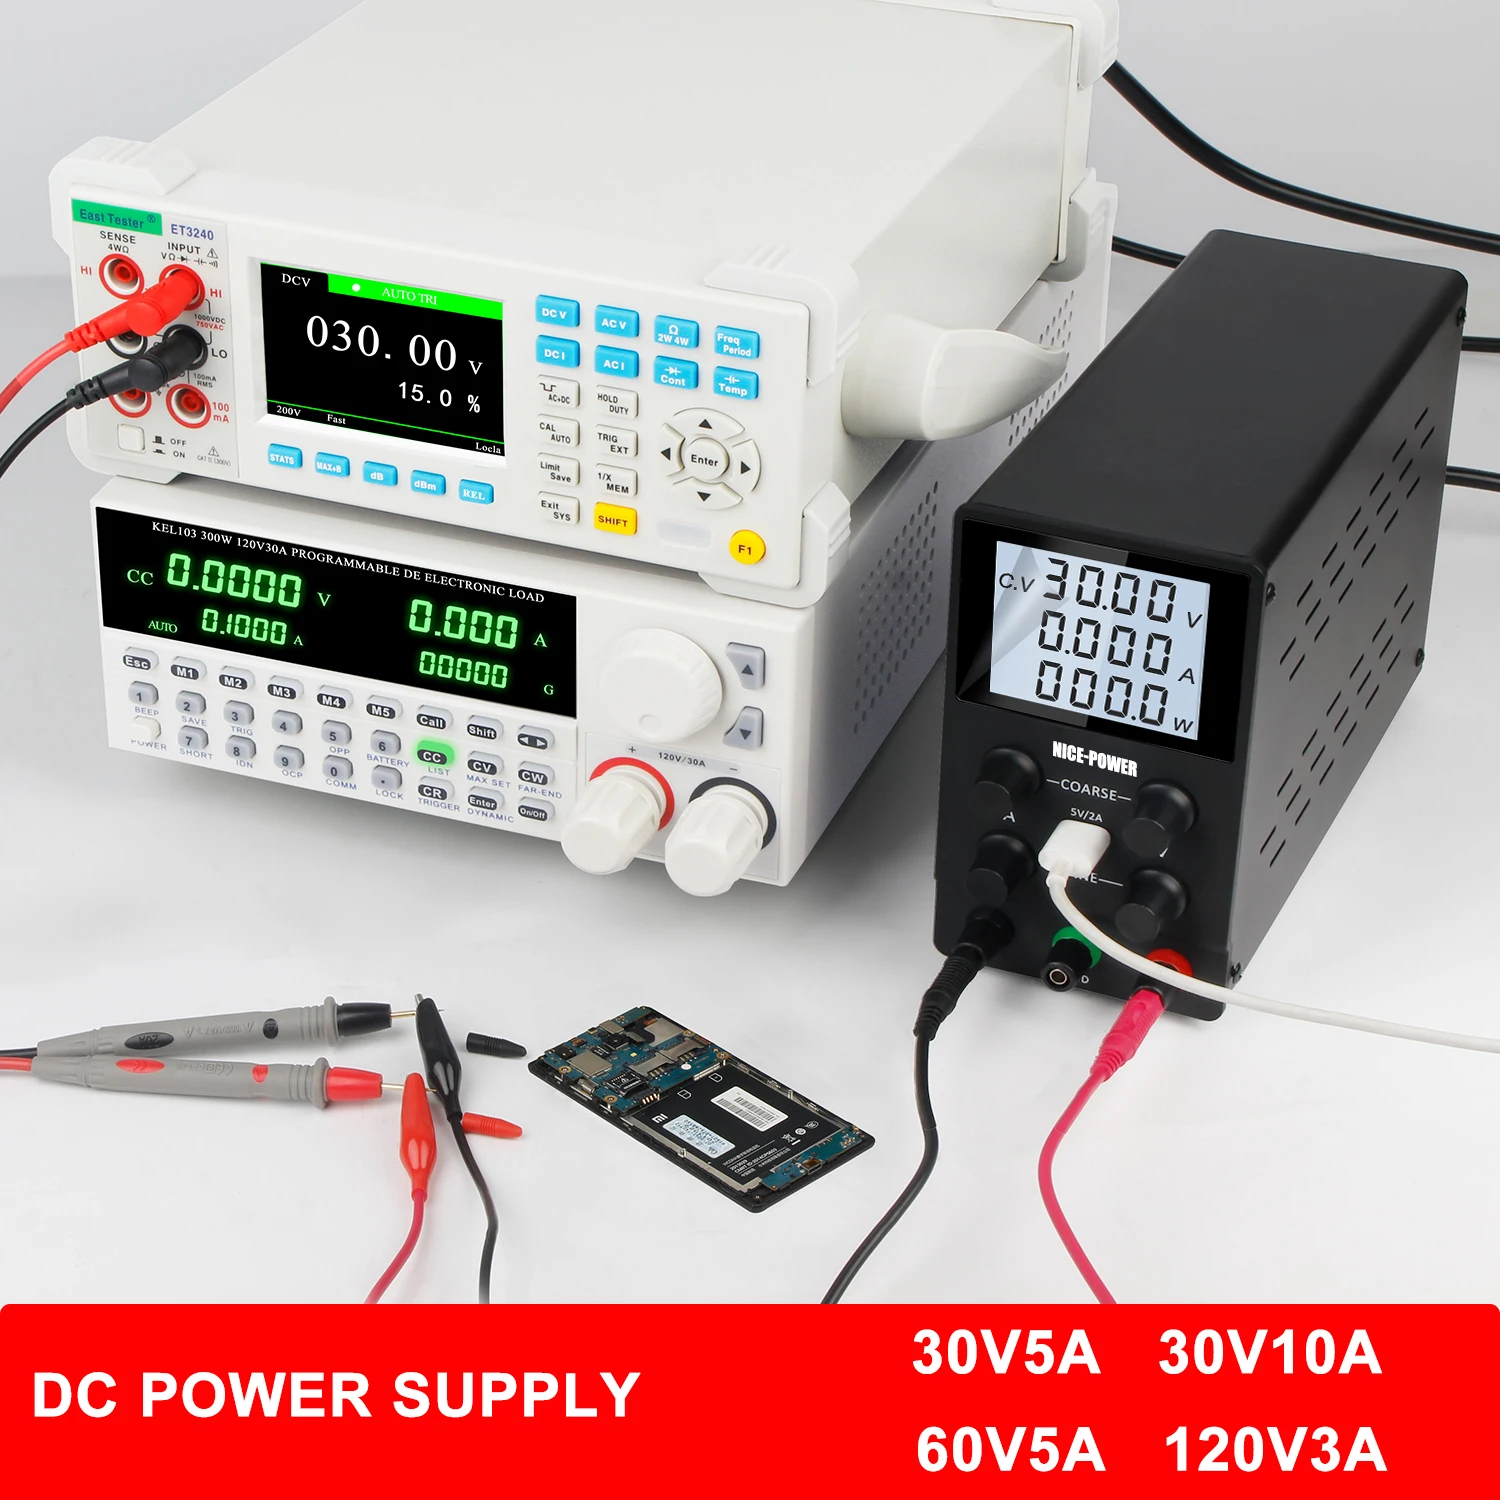 

NICE-POWER Variable DC Laboratory Power Supply Bipolar 120V3A Adjustable Lab Bench Power Source 60V5A Voltage Regulator 30V10A